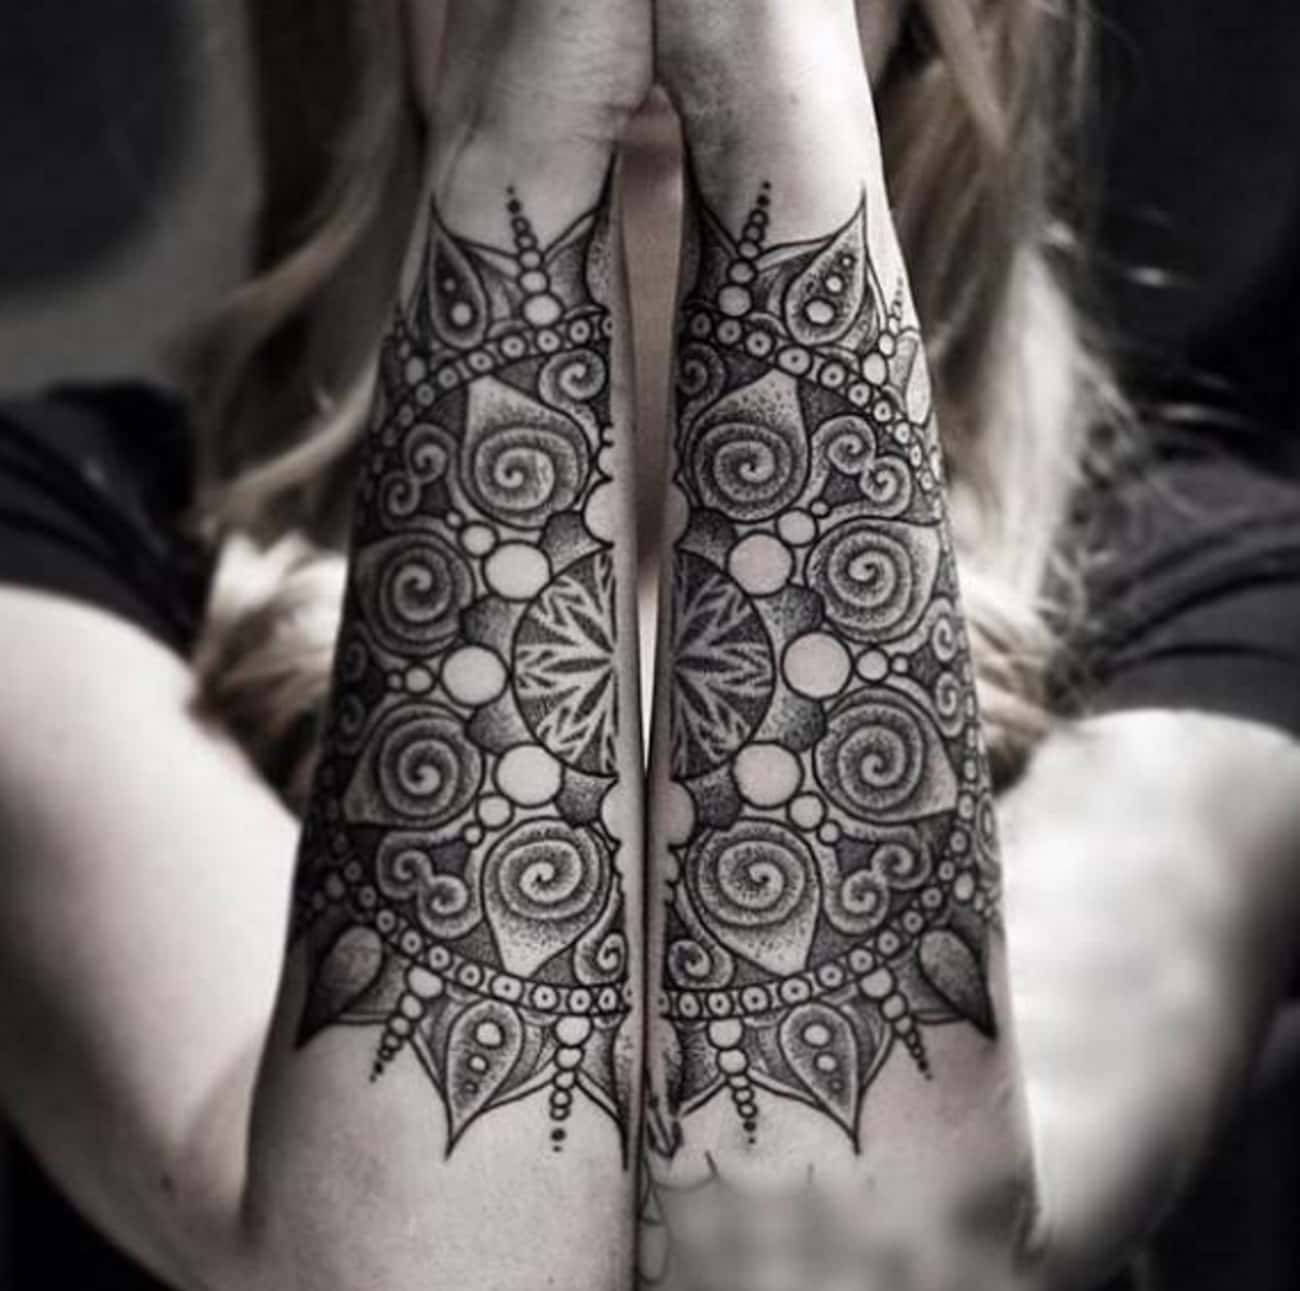 This Mandala Arm Tattoo